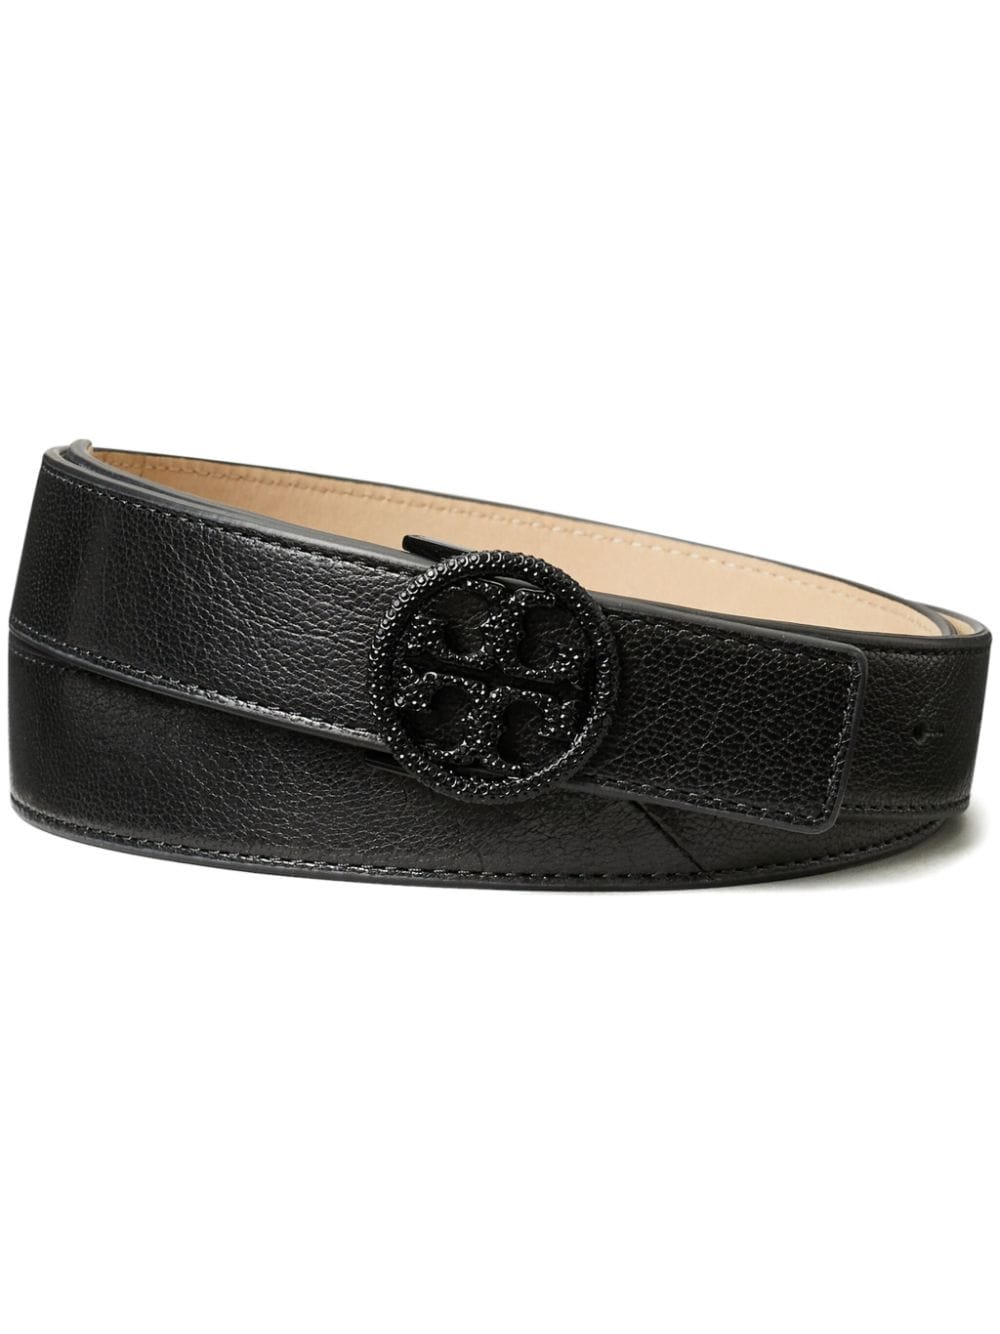 Tory Burch Miller crystal-embellished leather belt - Black von Tory Burch